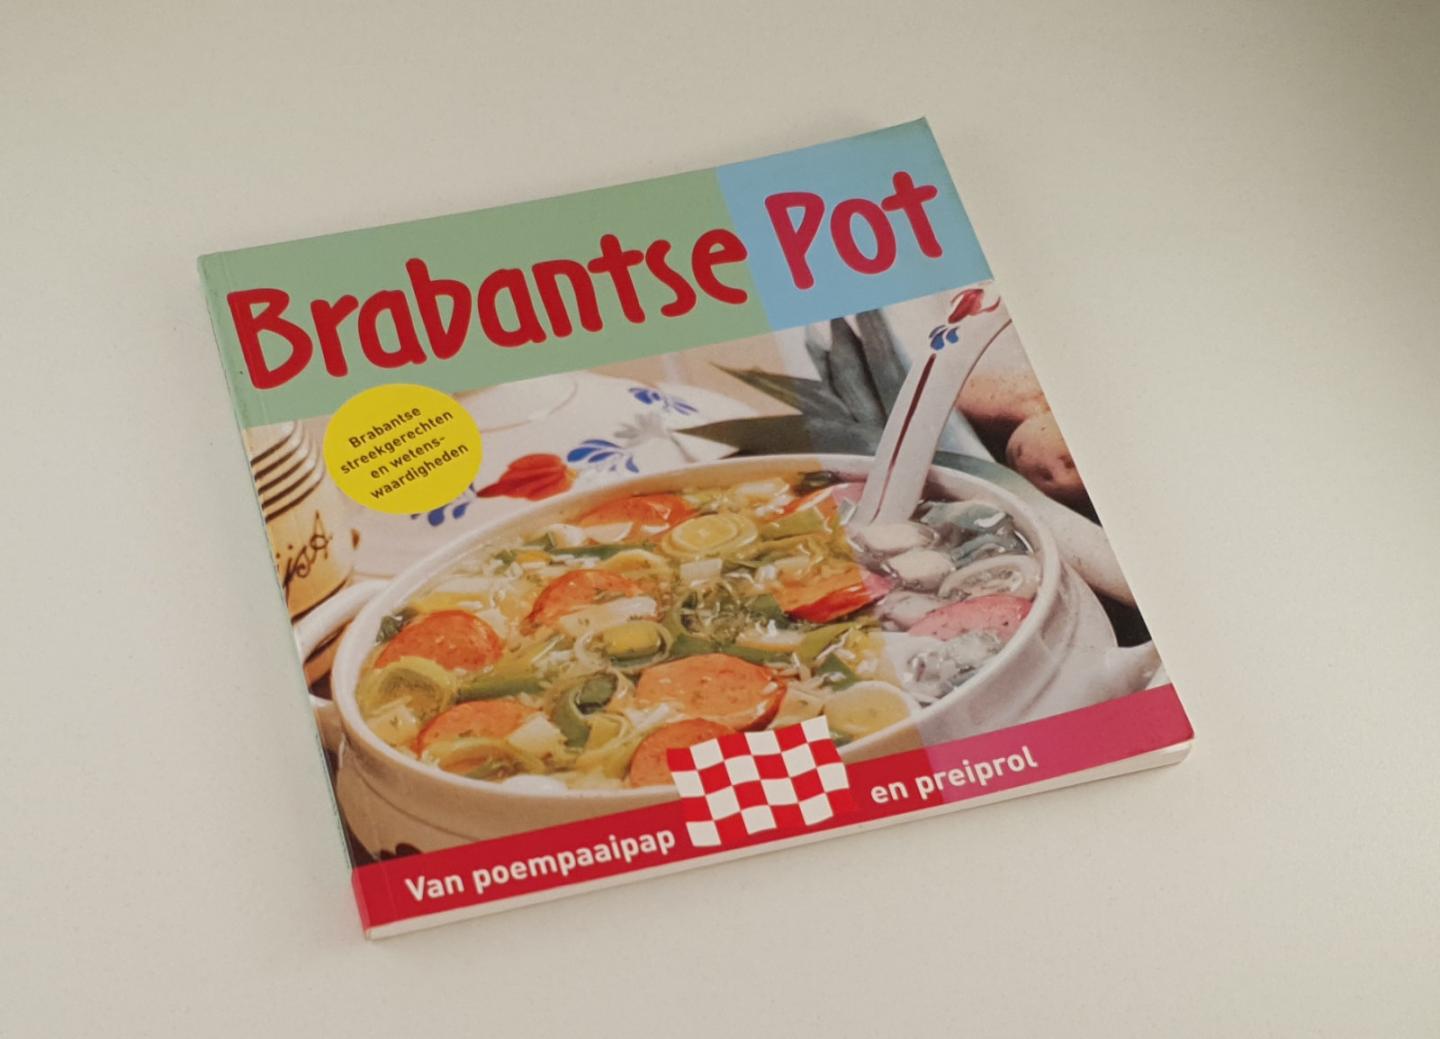  - Brabantse pot / van poempaaipap en preiprol